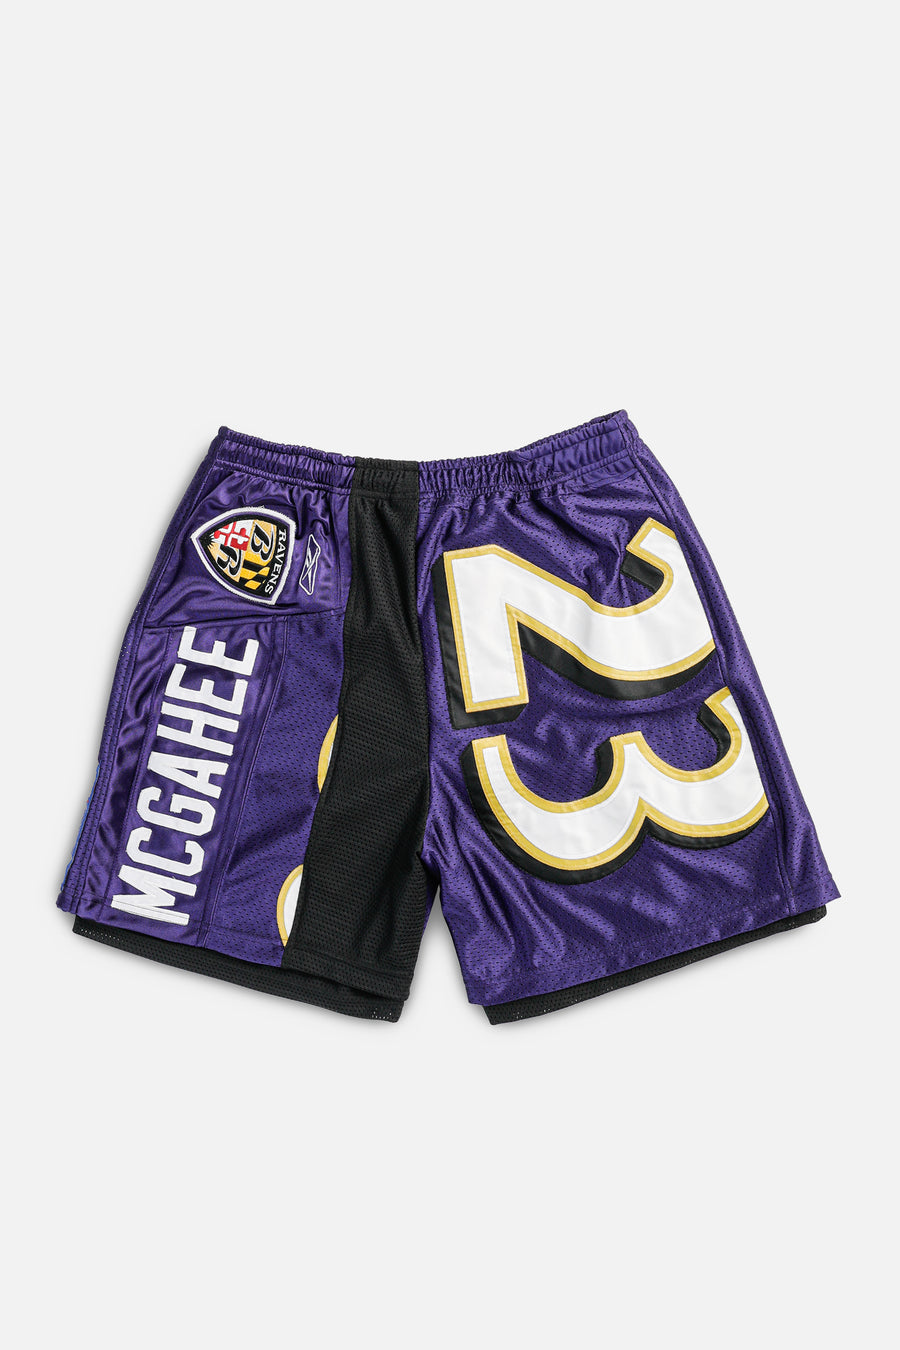 Unisex Rework Baltimore Ravens NFL Jersey Shorts - XL